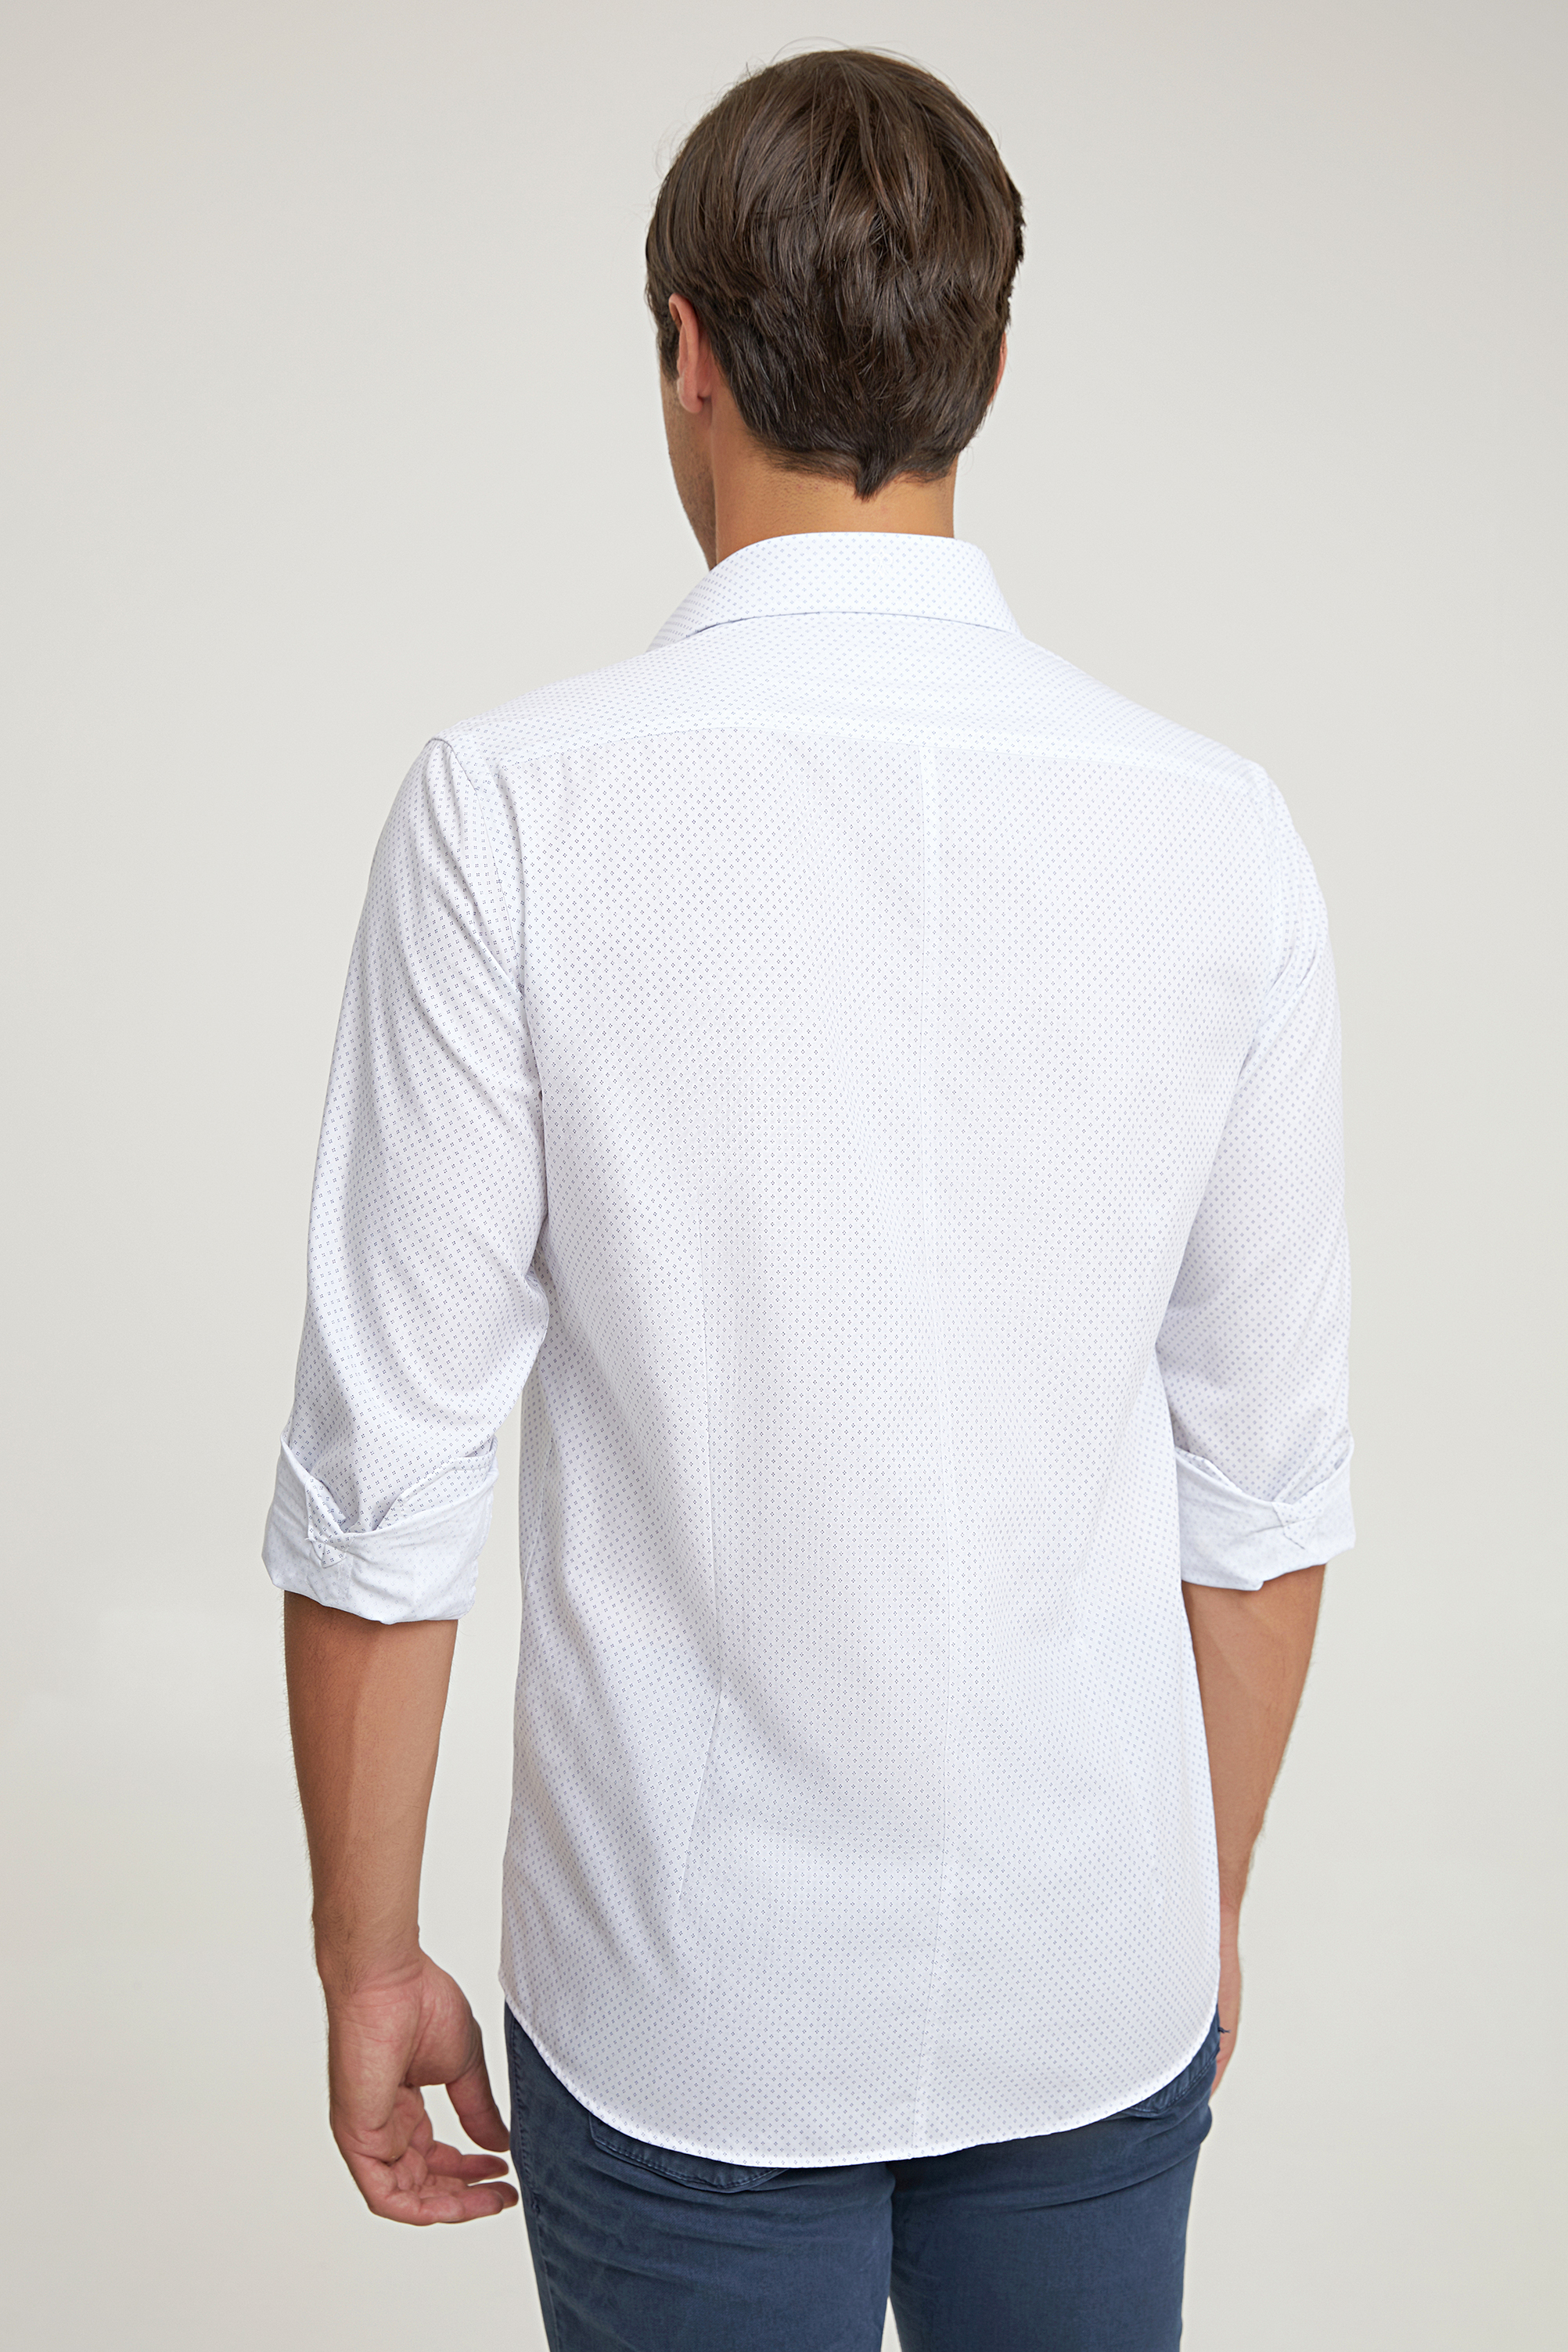 Damat Tween Damat Slim Fit Beyaz %100 Pamuk Gömlek. 4